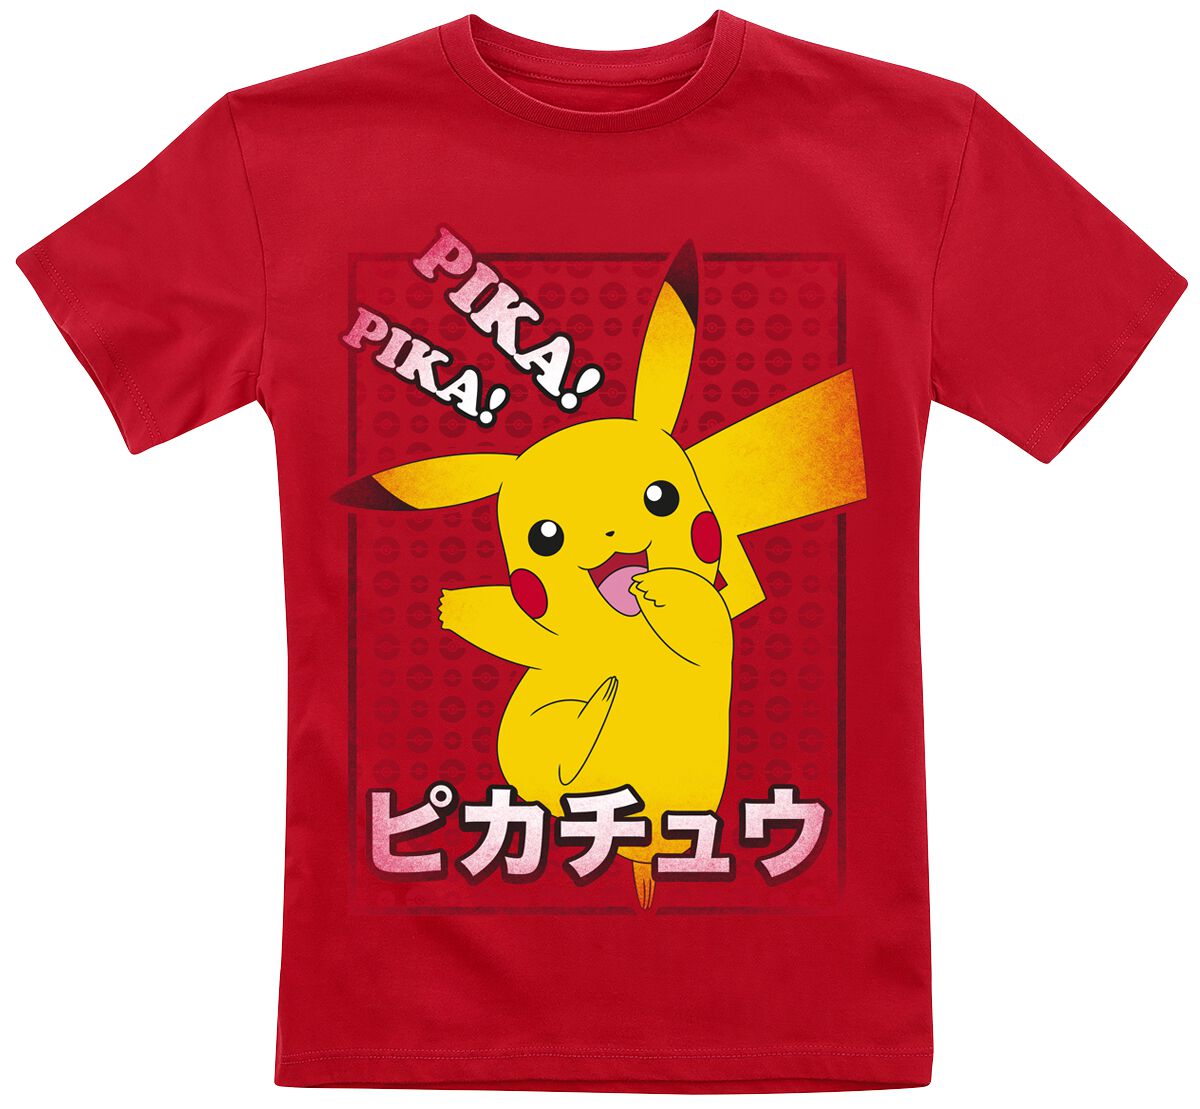 Pokémon - Kids - Pikachu Pika Pika! - T-Shirt - rot von Pokémon